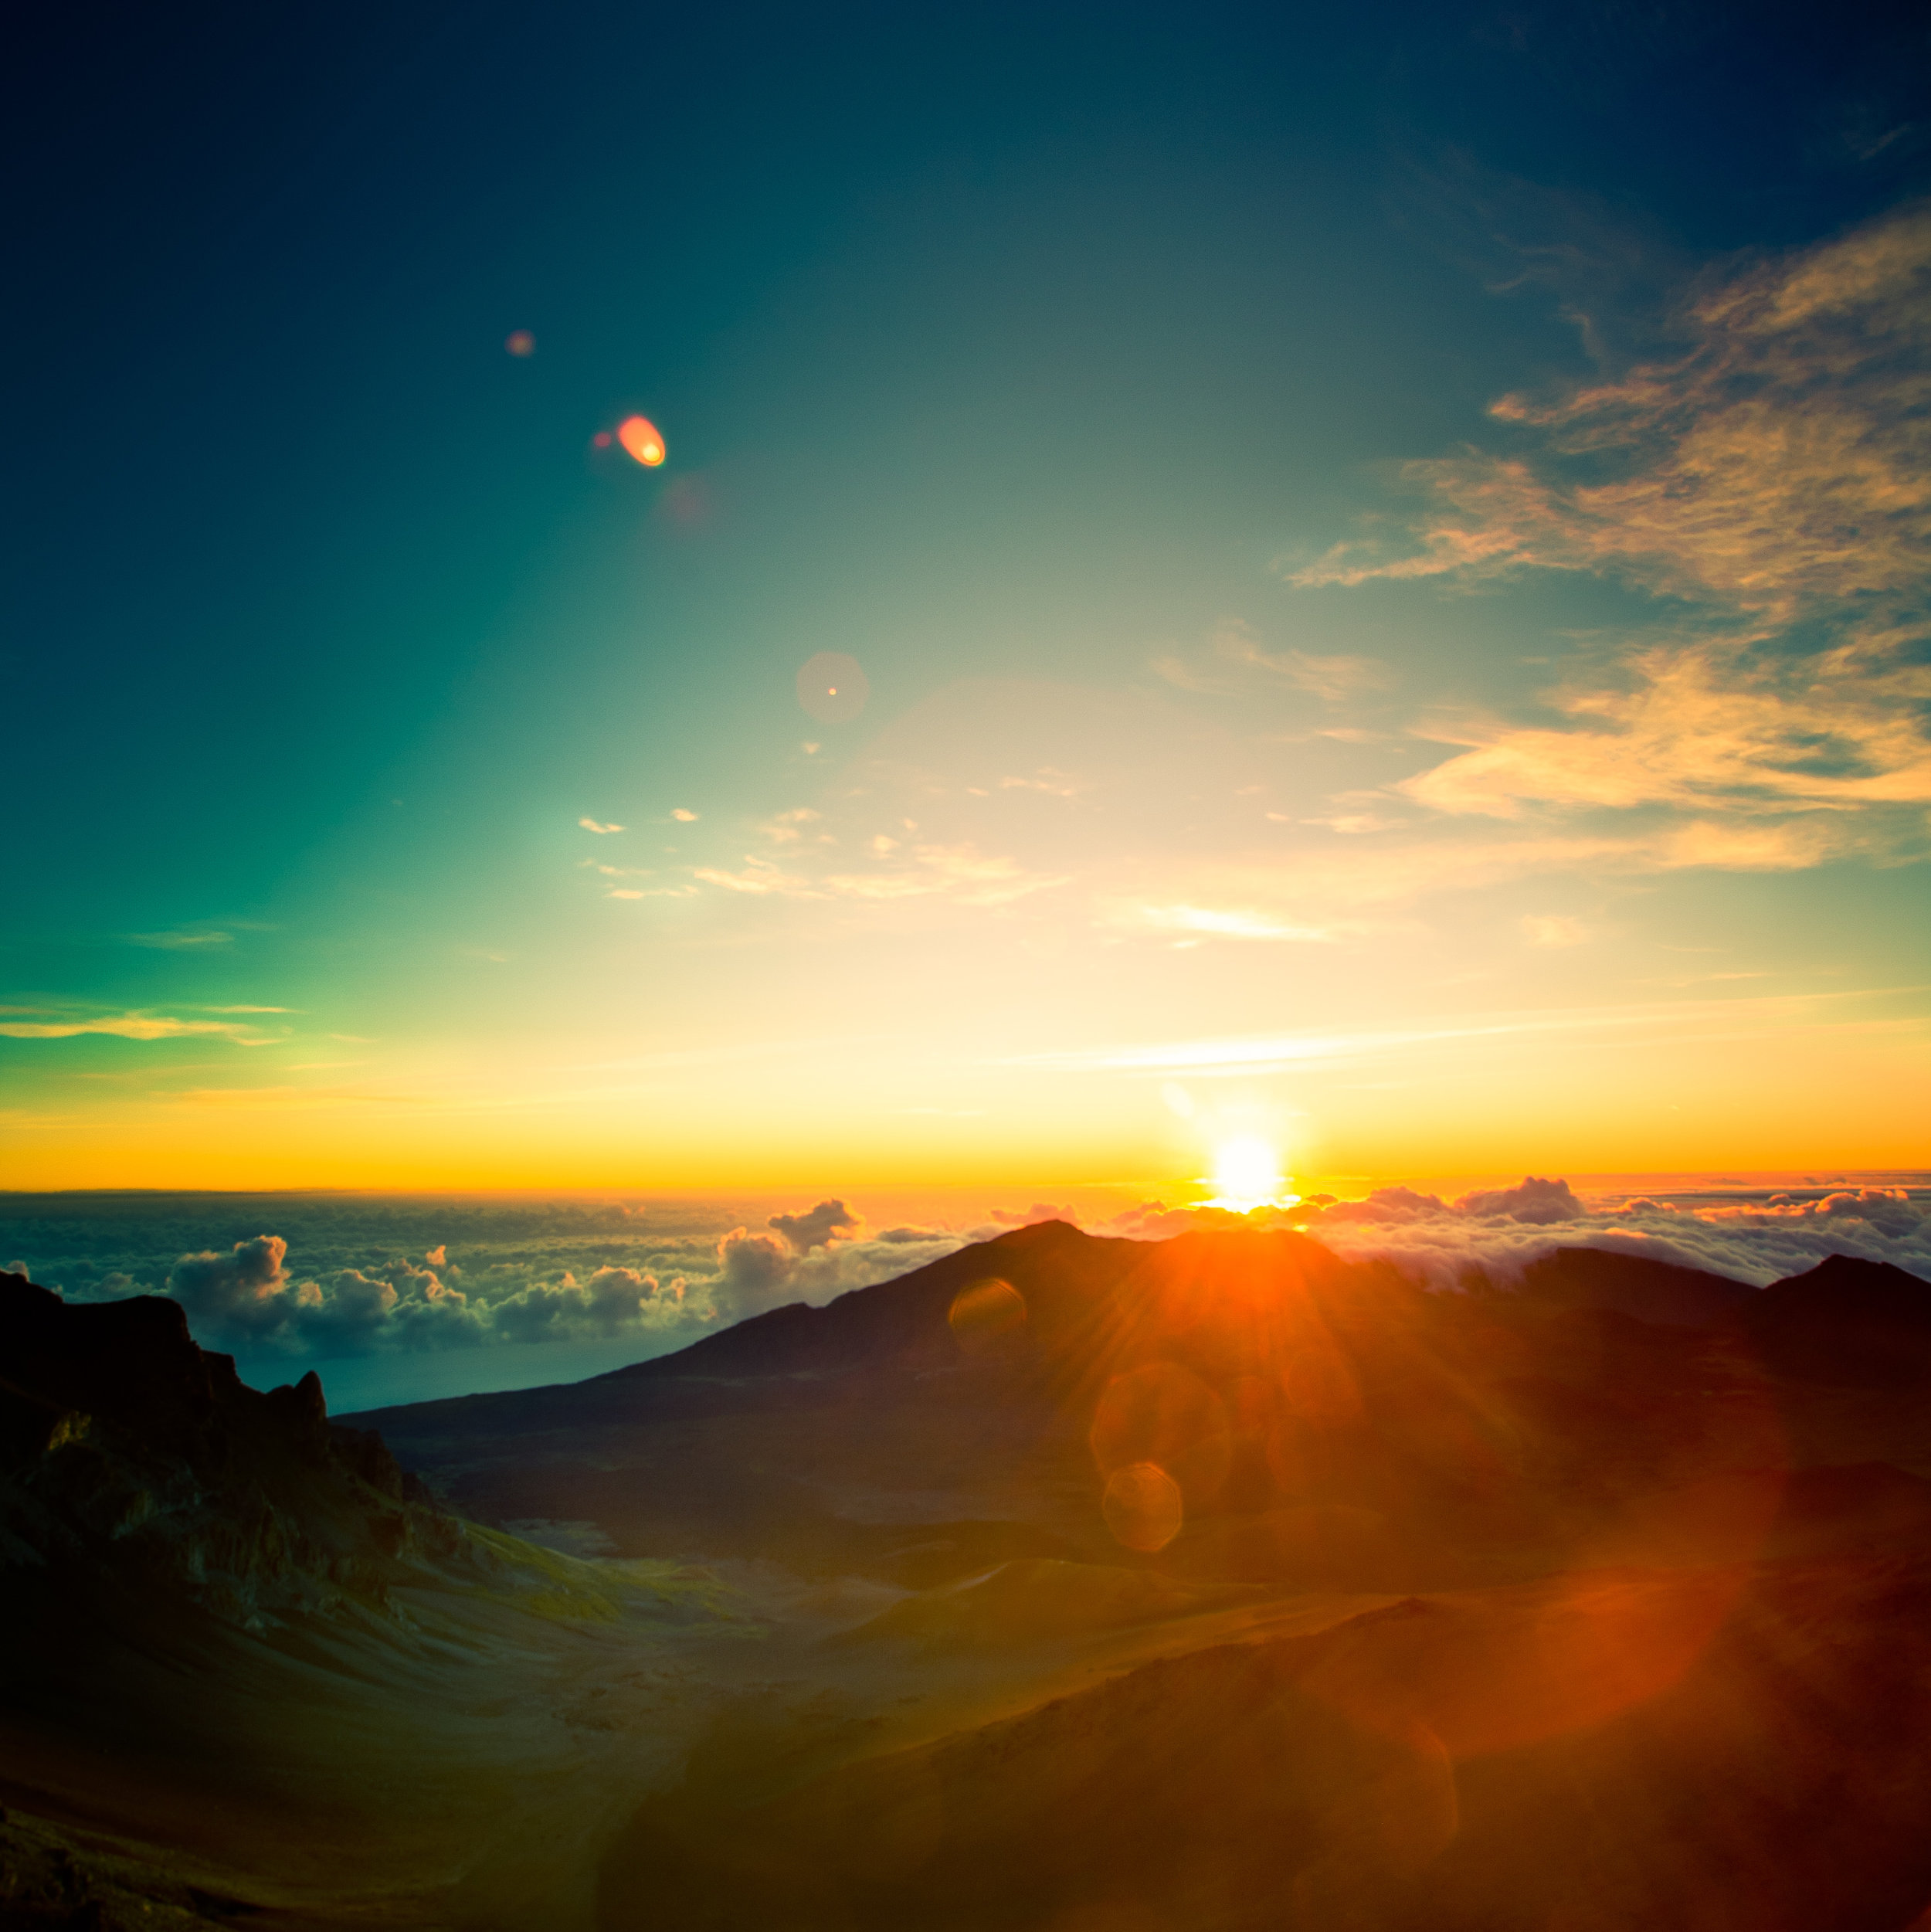 Maui Haleakakla sunrise clouds house sun flare joy wonder